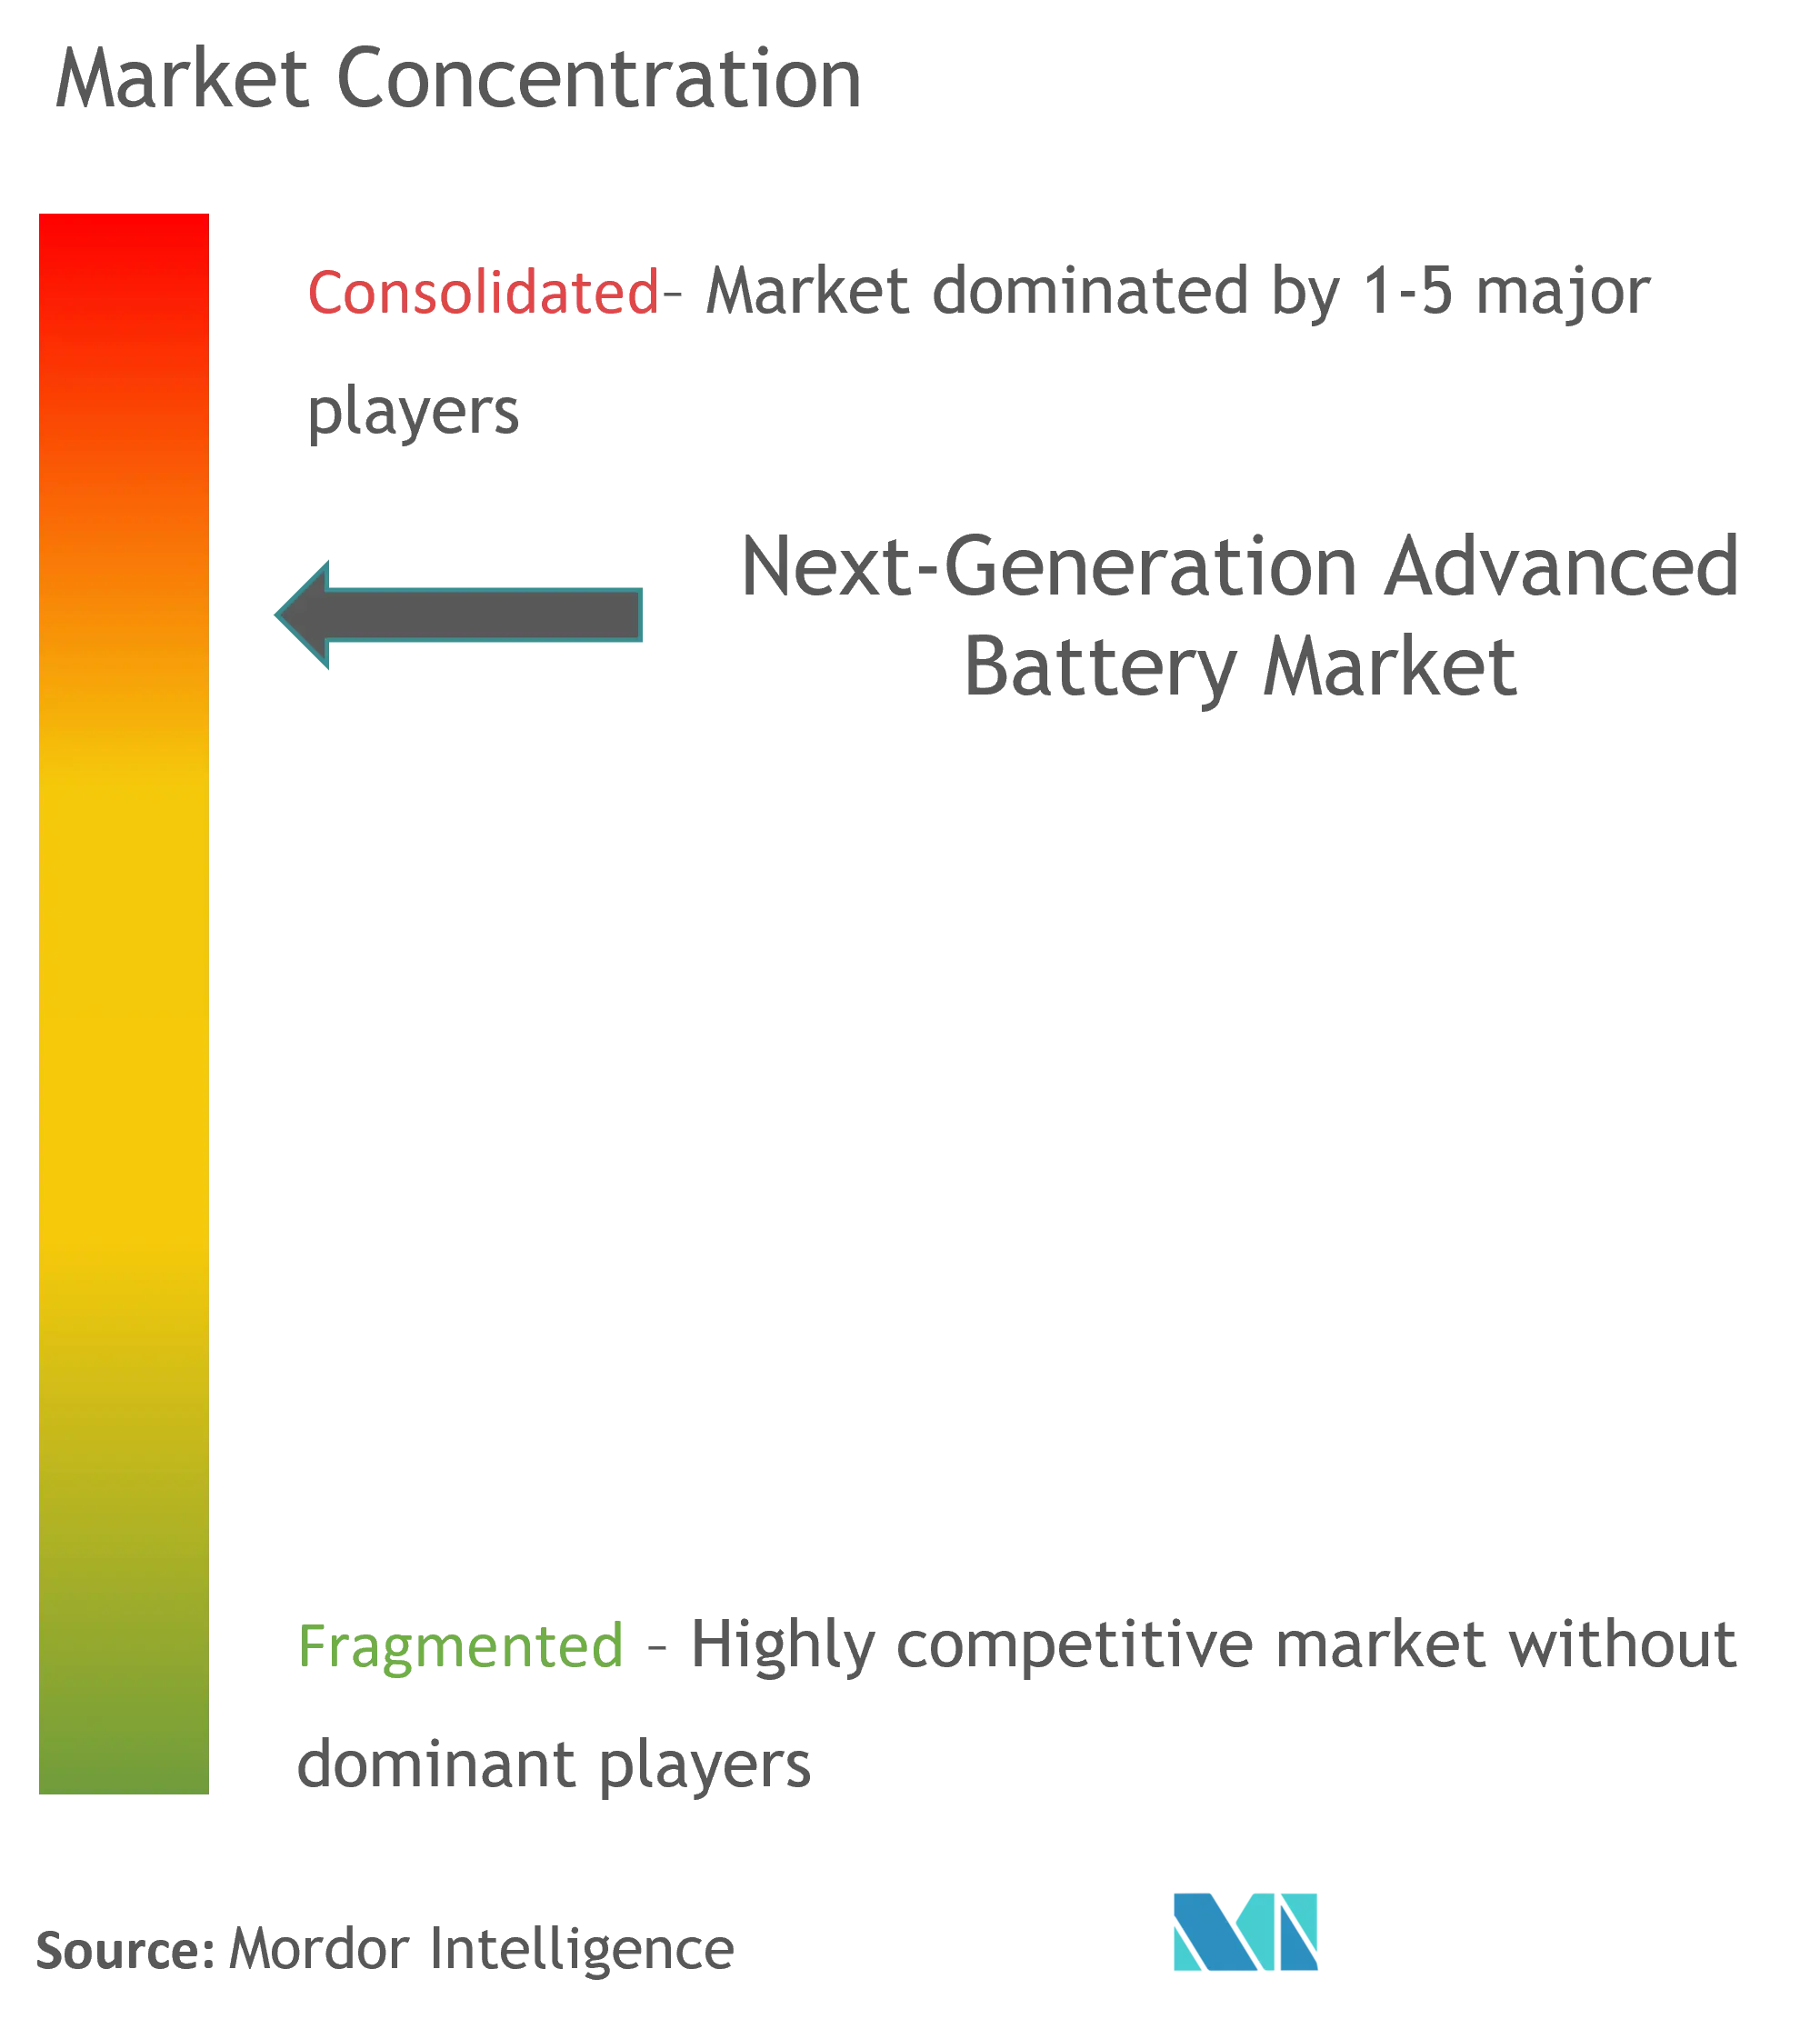 Next Generation Advanced Battery Market Concentration